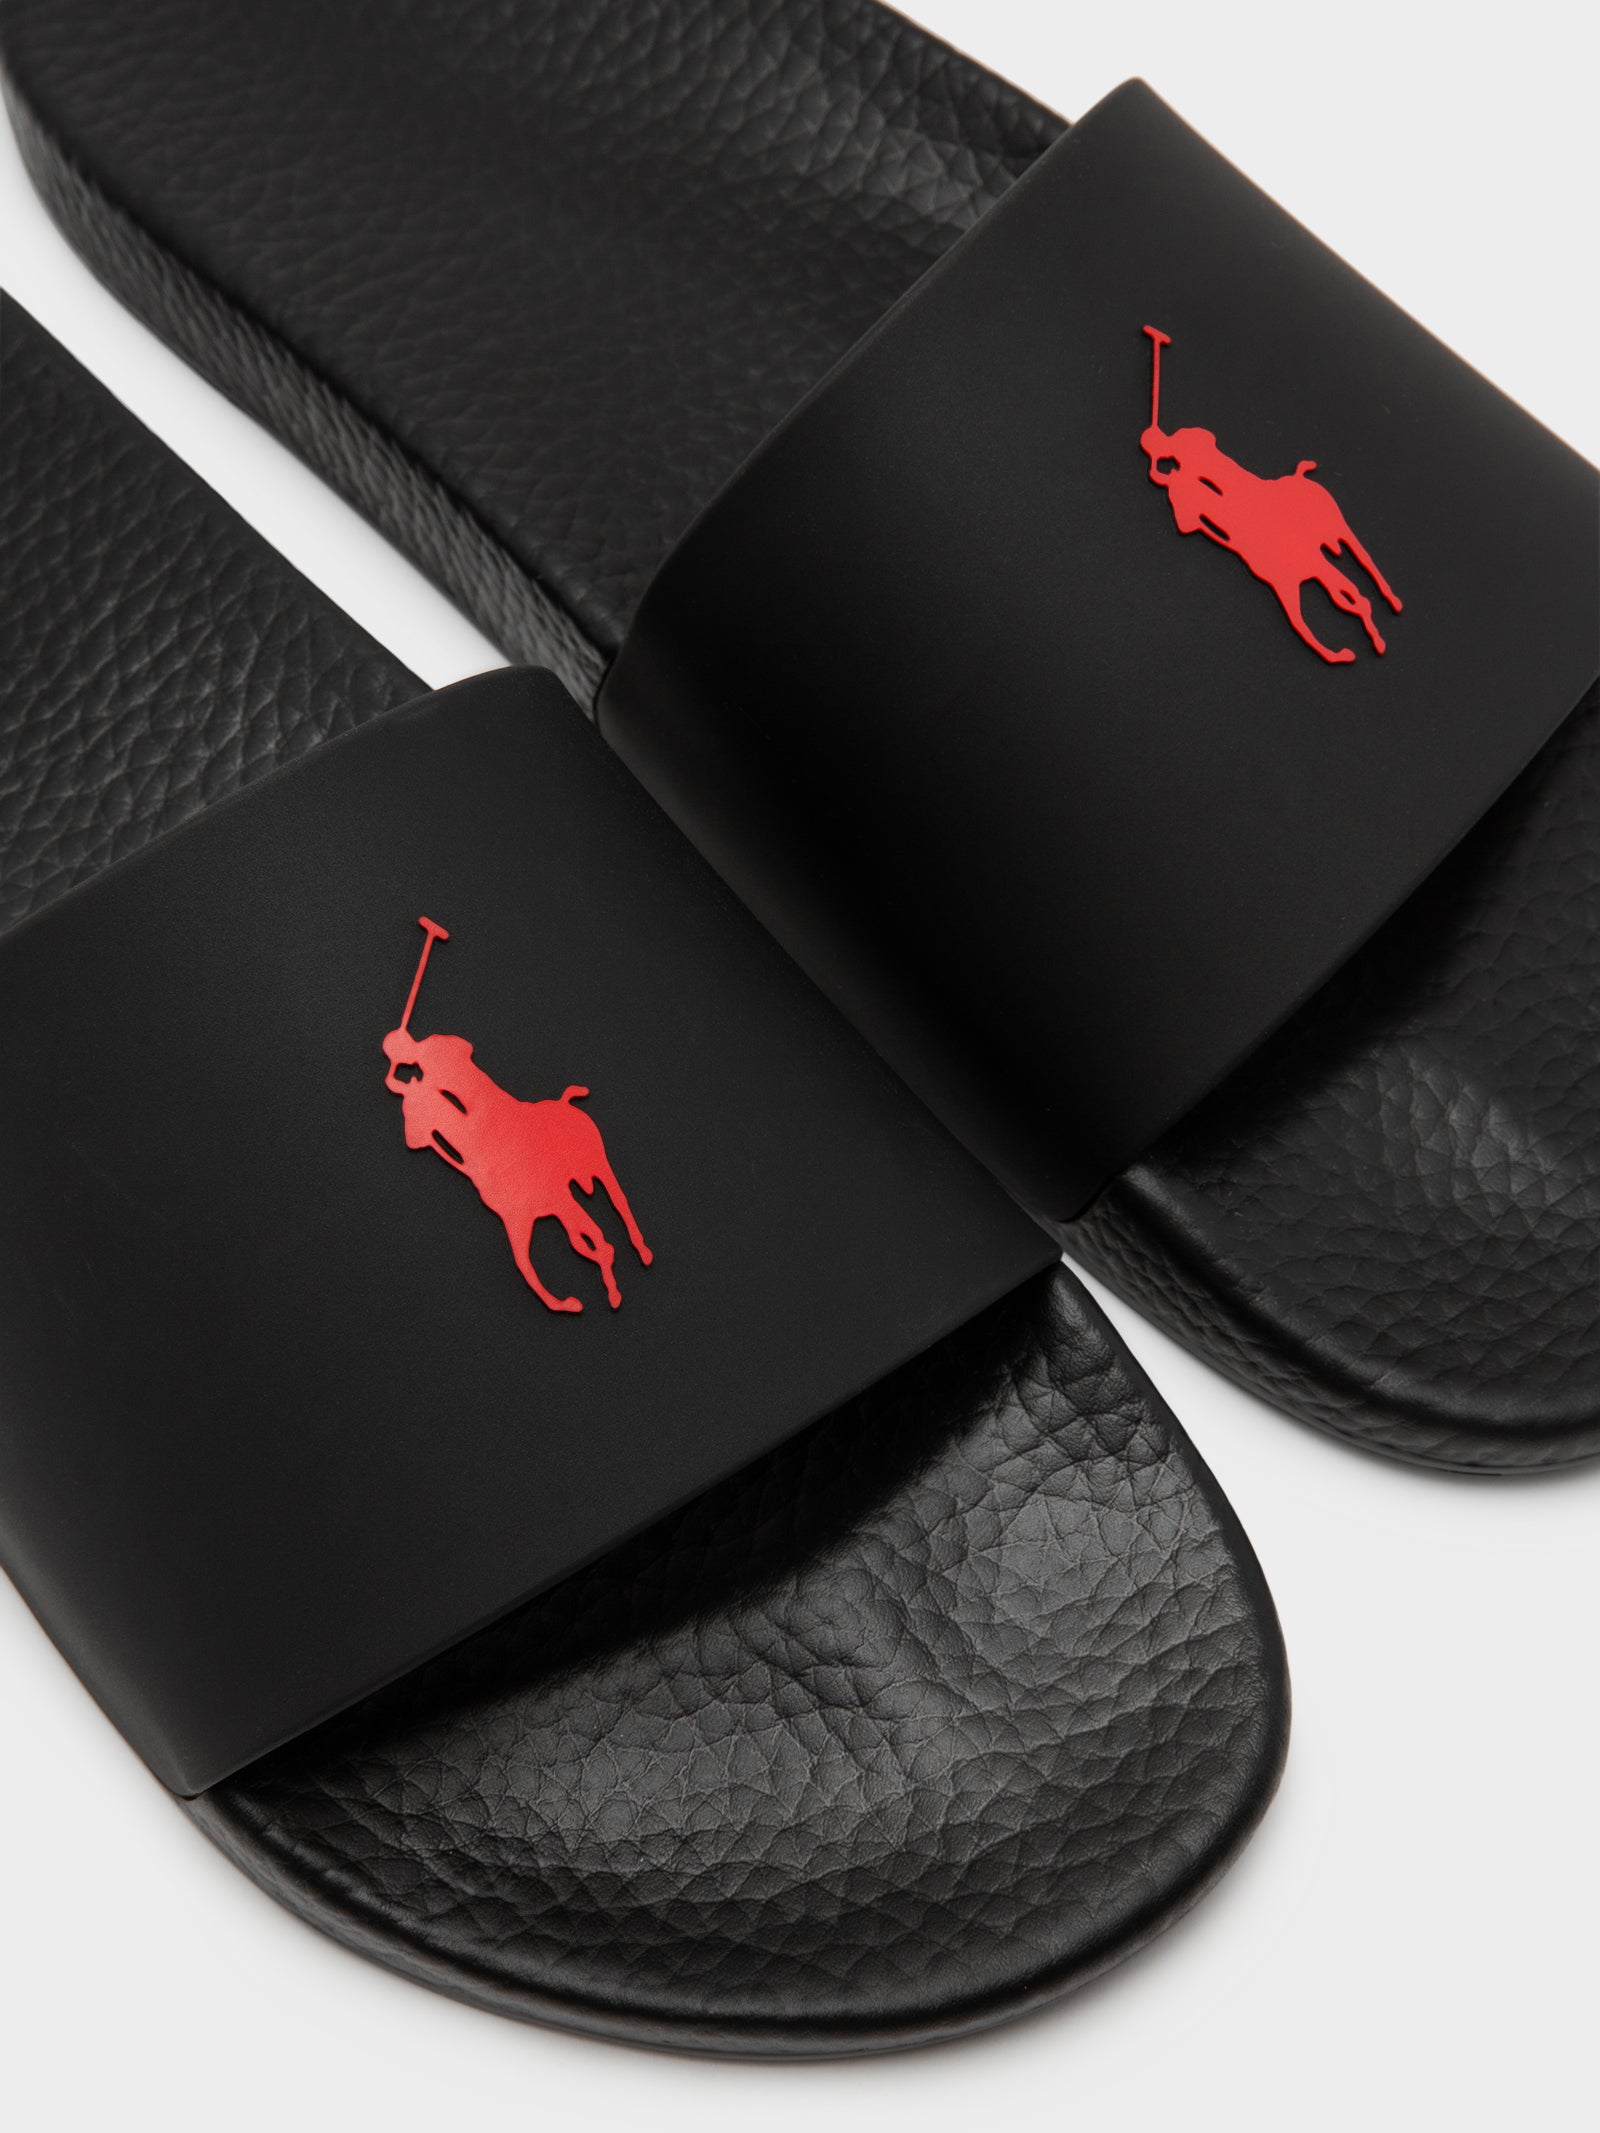 Unisex Polo Sport Slides in Red & Black - Glue Store